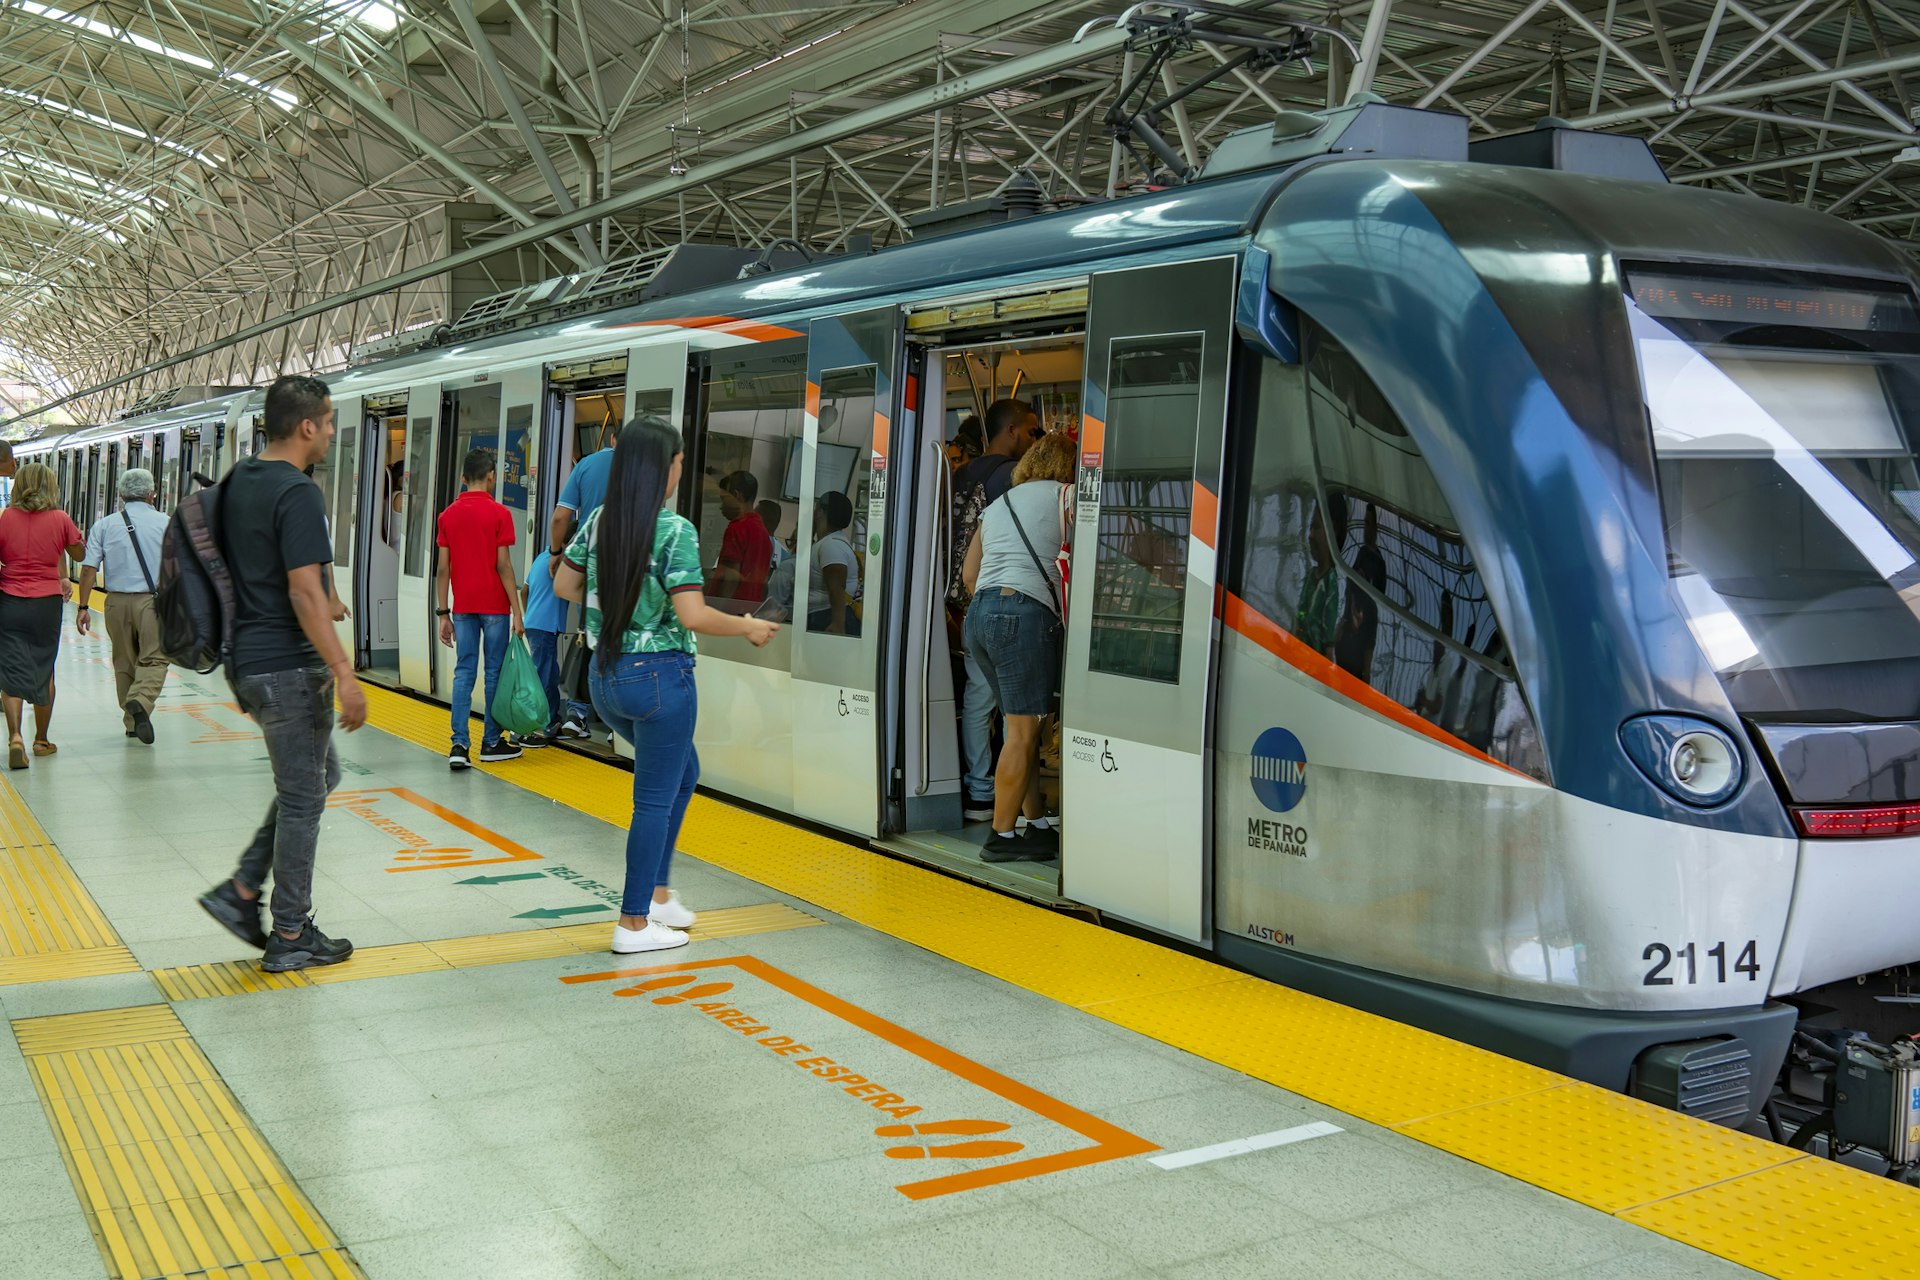 Passengers travel on a subway train in Panama City